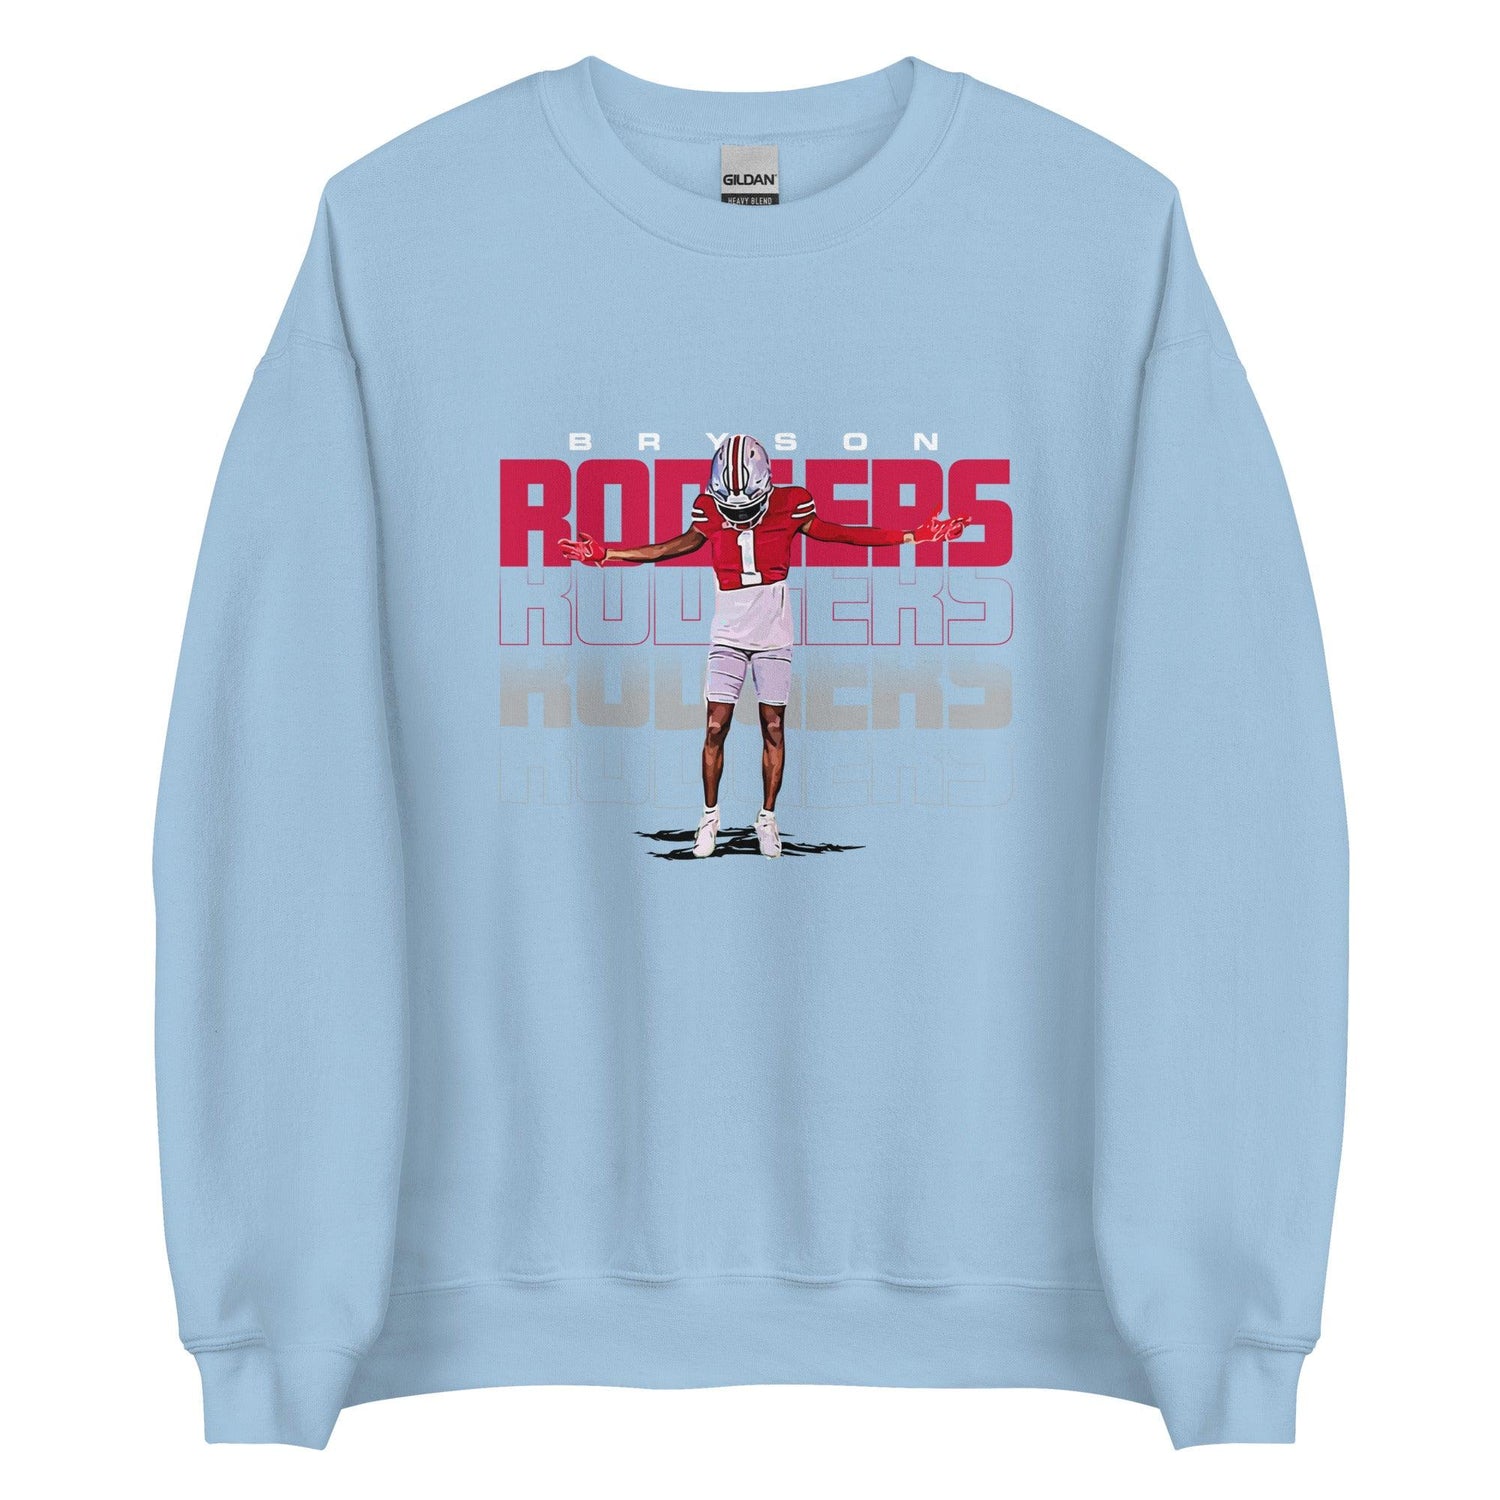 Bryson Rodgers "Gameday" Sweatshirt - Fan Arch